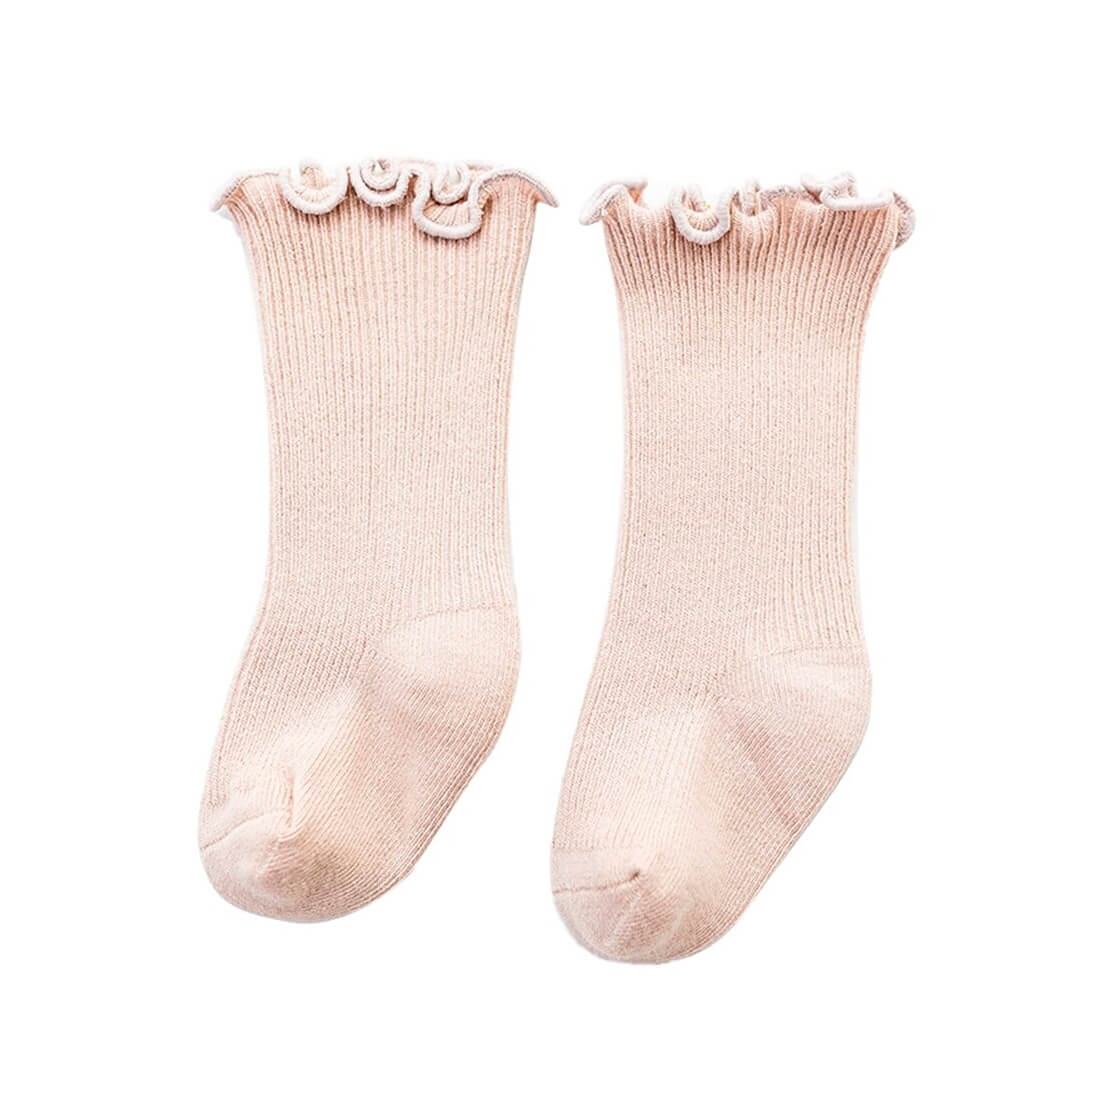 Solid Ruffled Socks Beige 0-12 M 